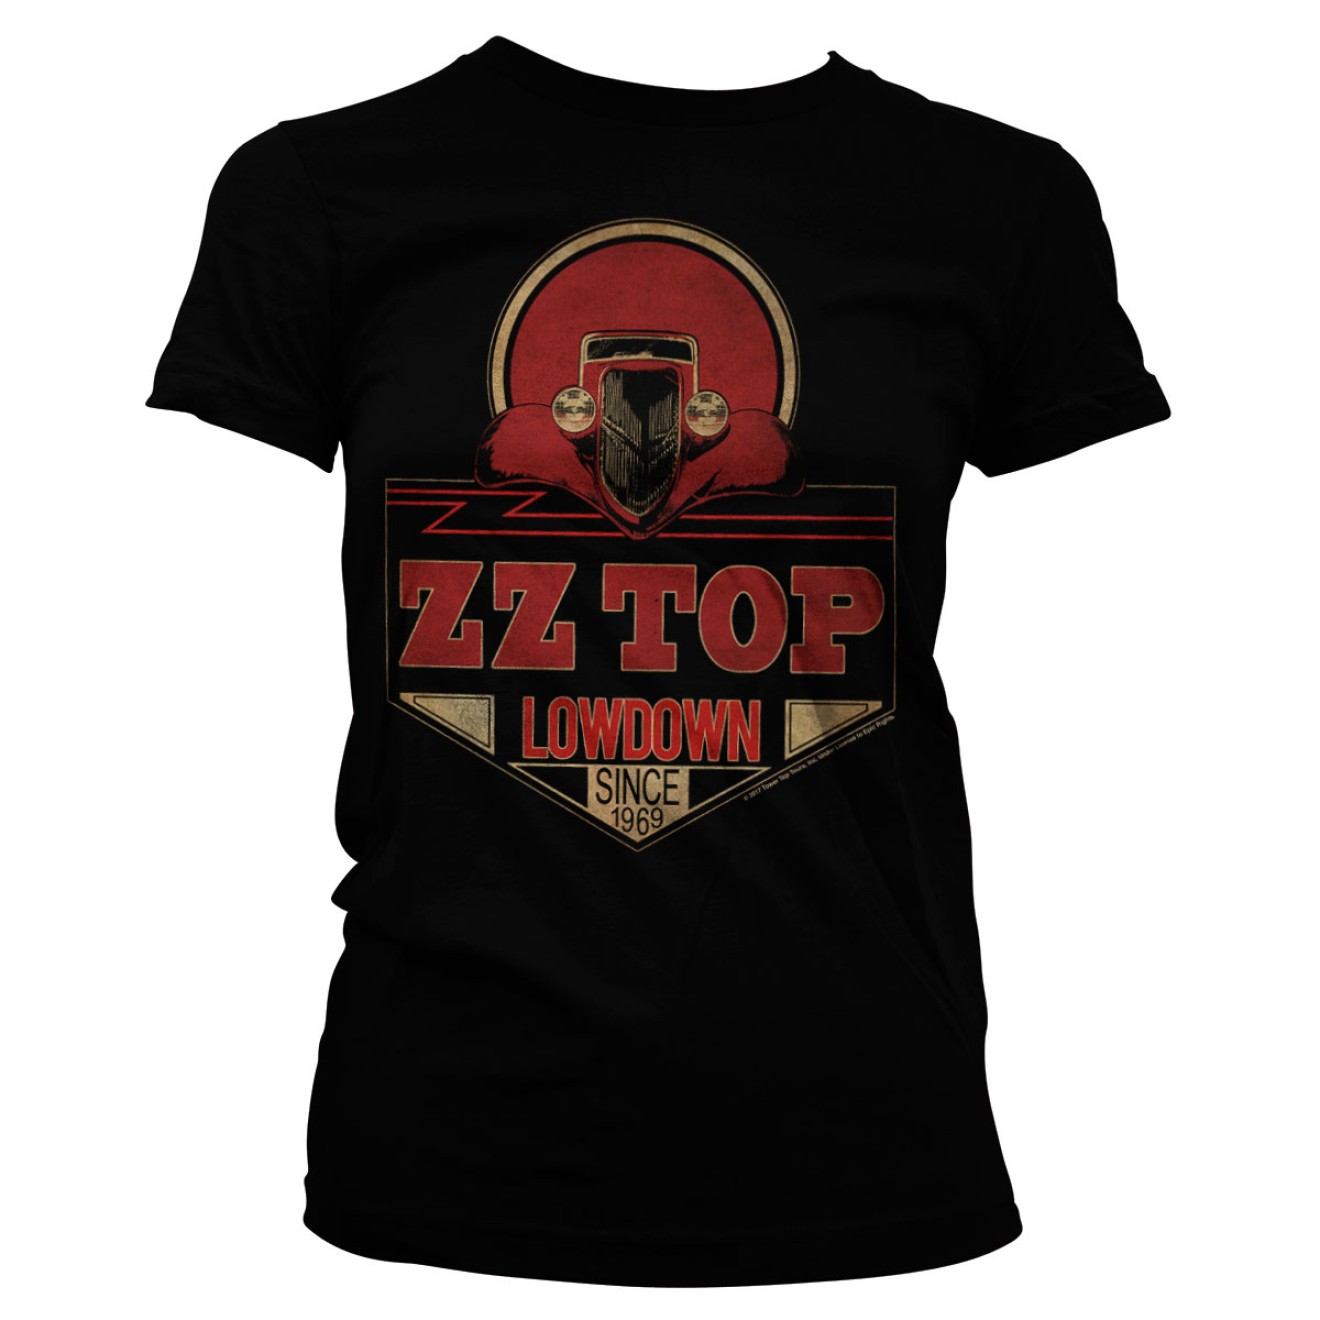 ZZ-Top - Lowdown Since 1969 Girly Tee